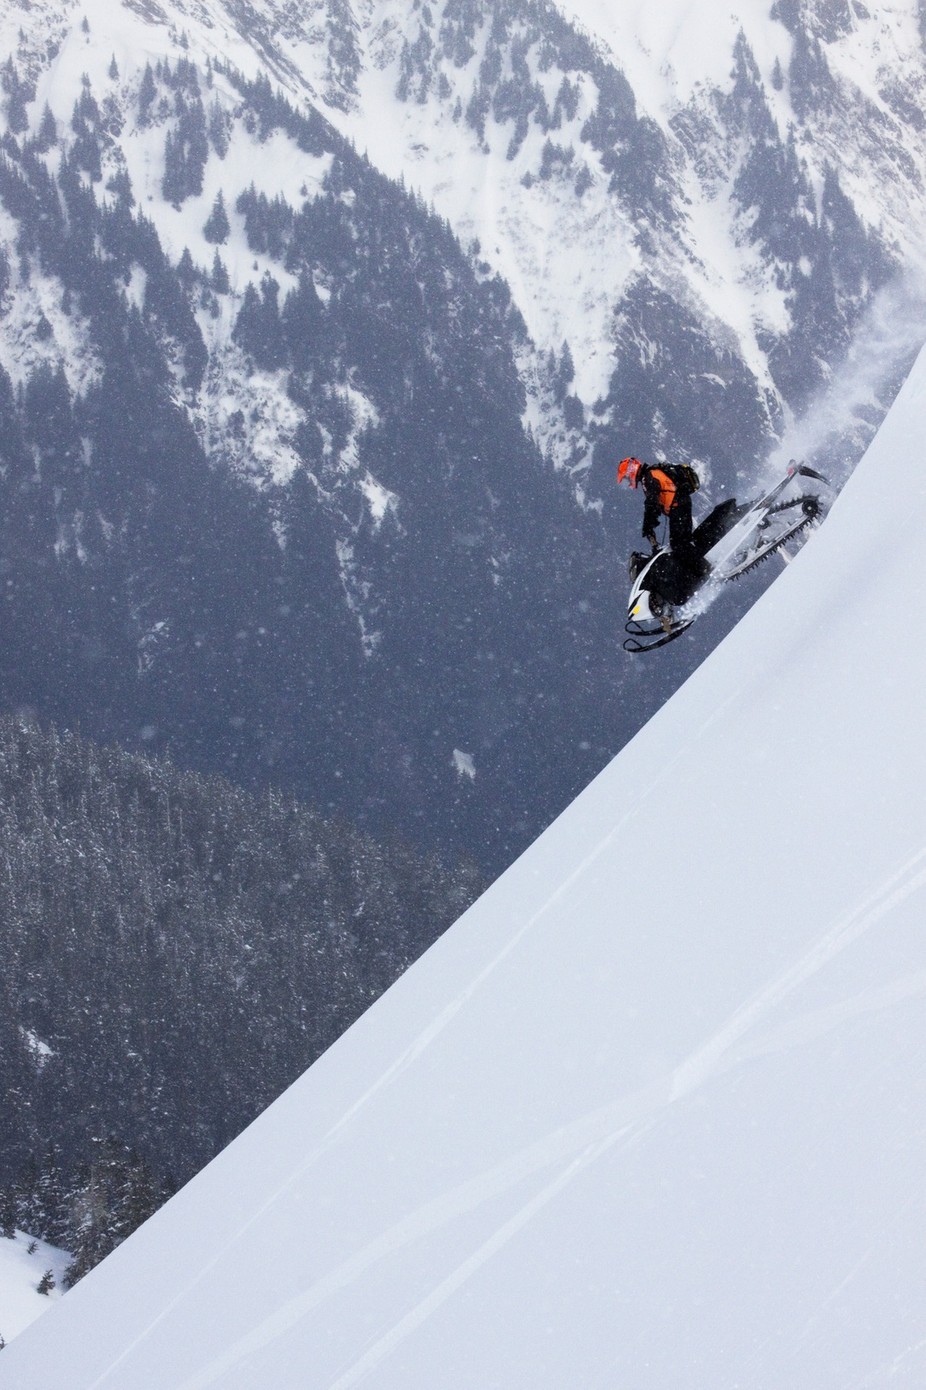 I love flying my Ski Doo by michaeldobson - Full Adrenaline Rush Photo Contest